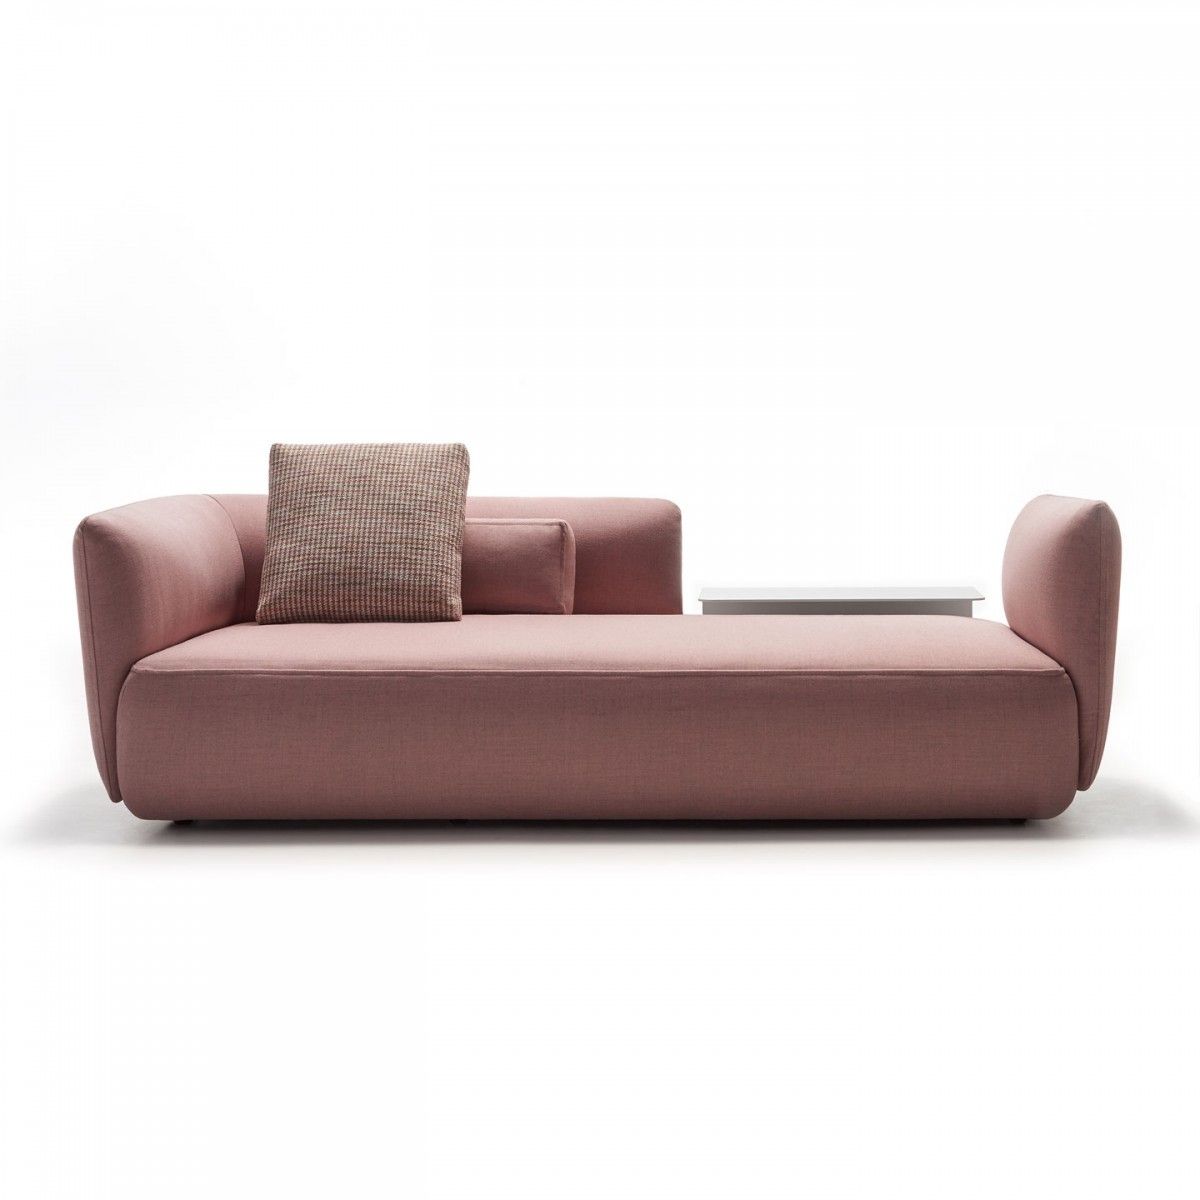 Contemporary Designer Sofas | Aram In Low Sofas (View 7 of 10)